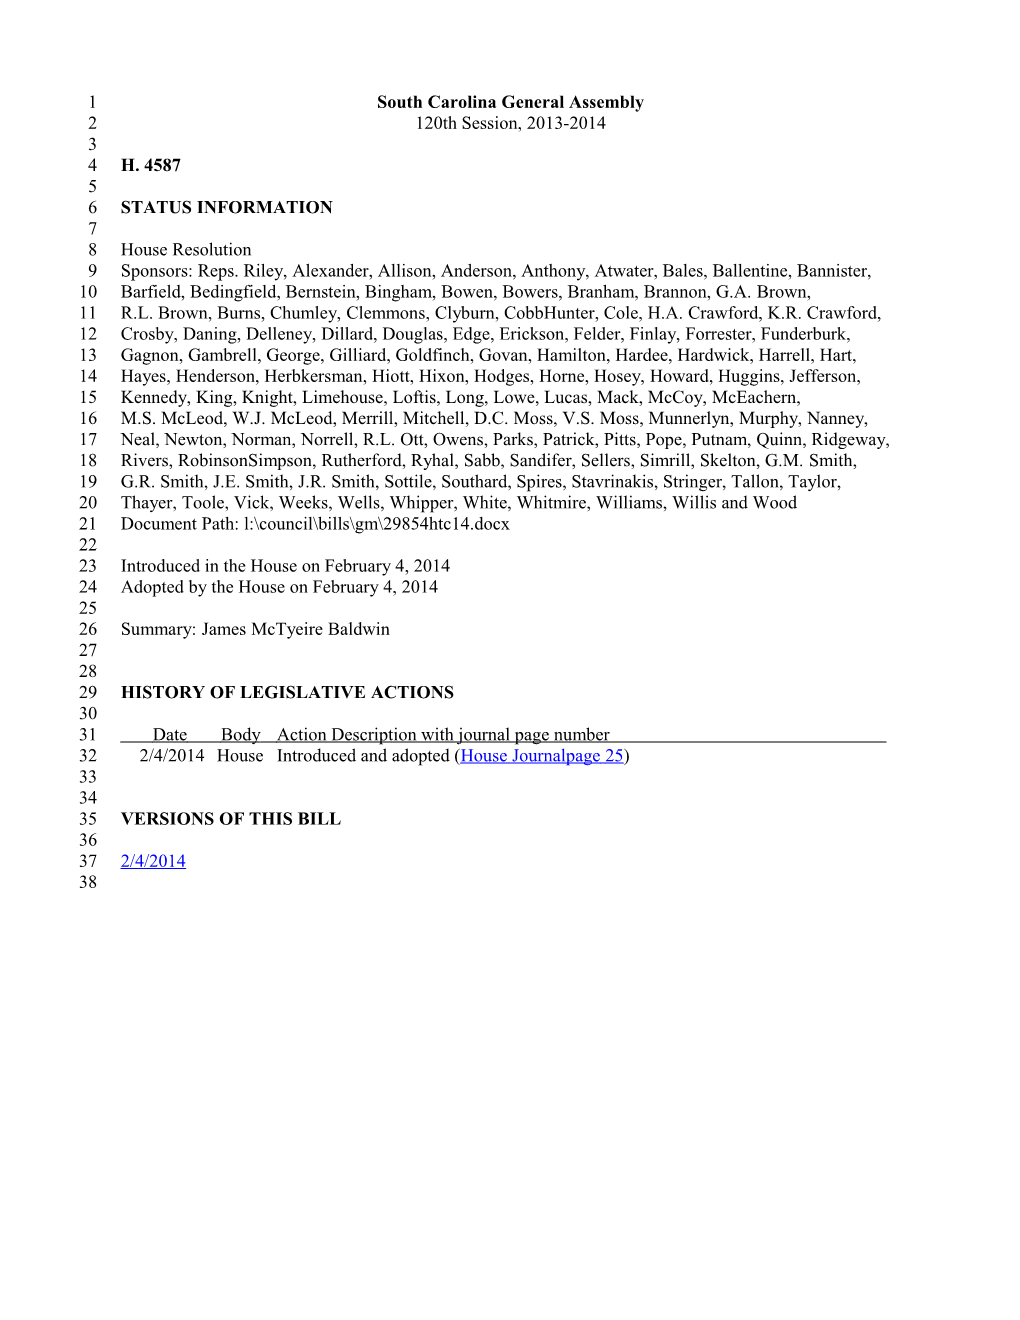 2013-2014 Bill 4587: James Mctyeire Baldwin - South Carolina Legislature Online